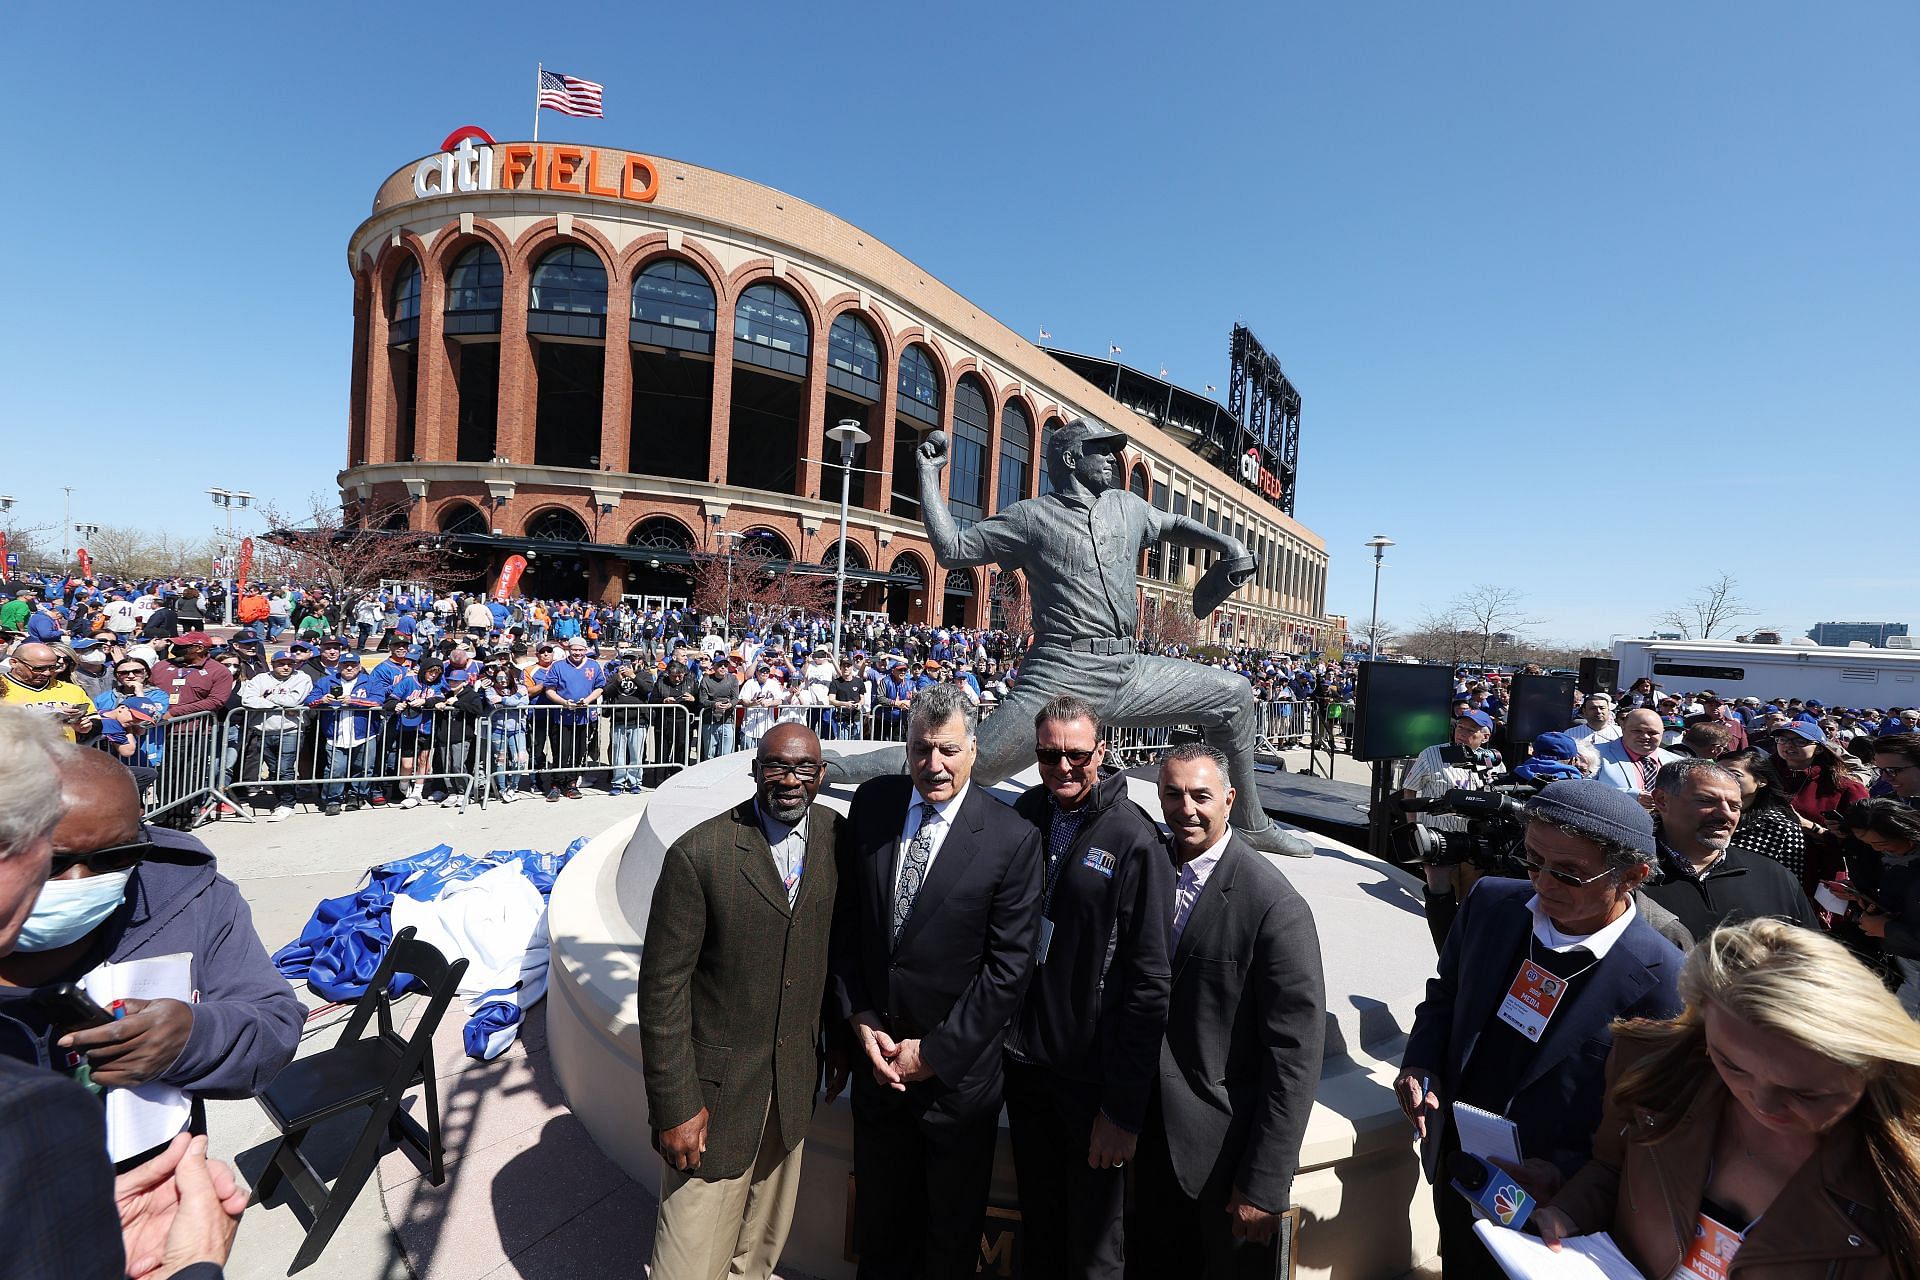 Keith Hernandez, New York Mets legend